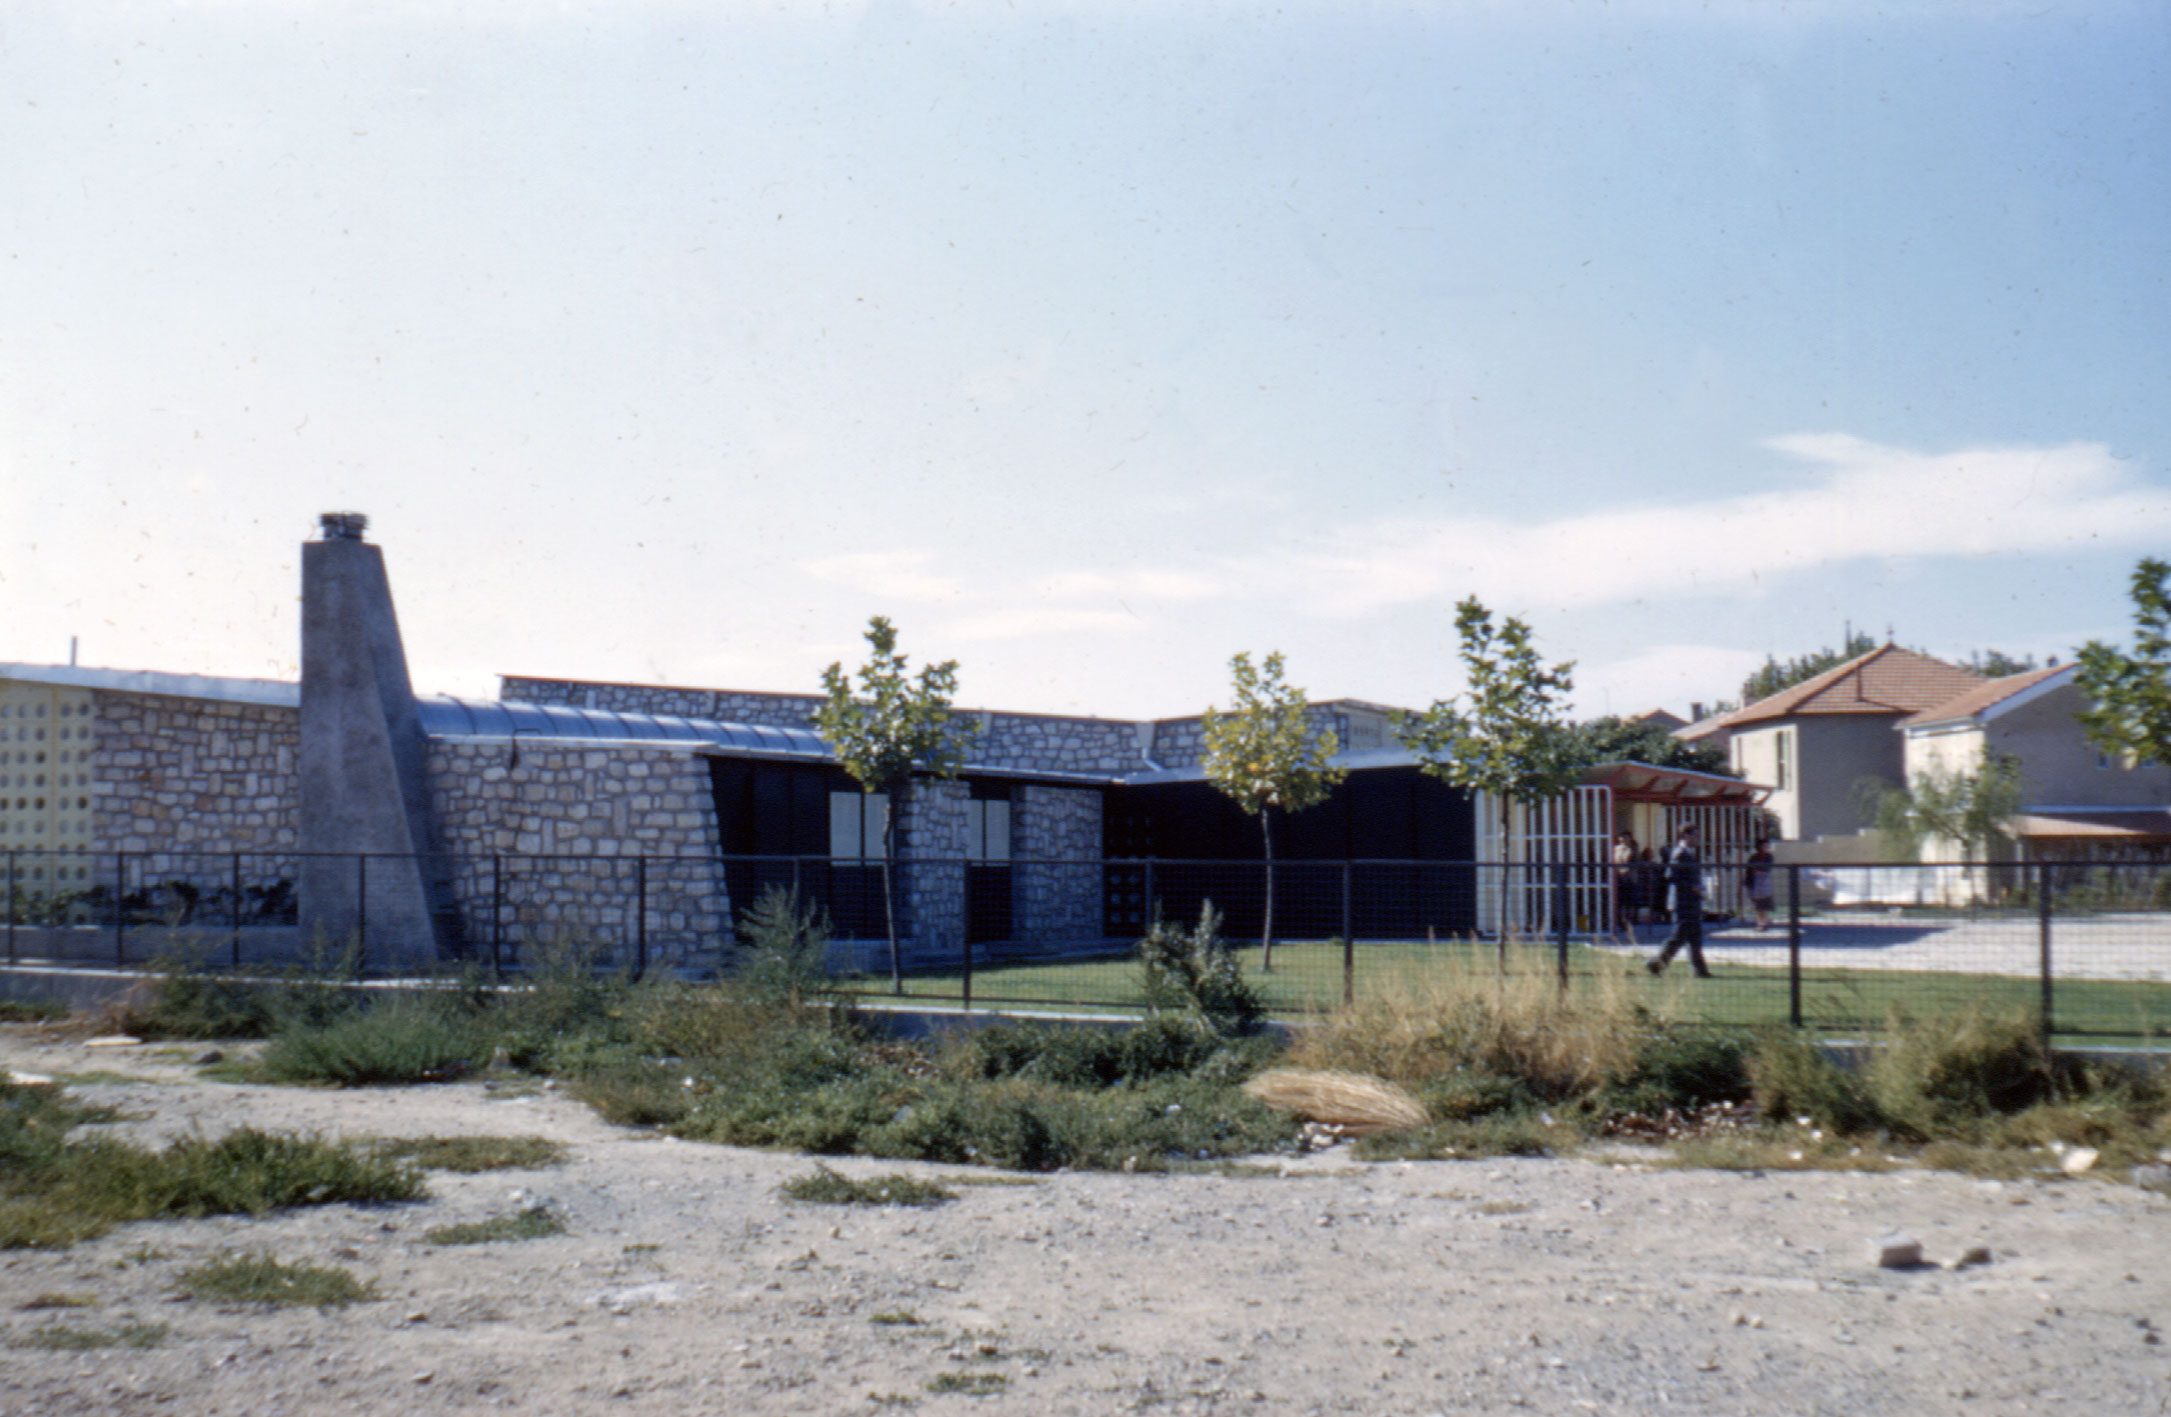 Ferrière kindergarten, Martigues, 1950–1953 (A. Arati, M. Boyer and C. Lestrade, architects).